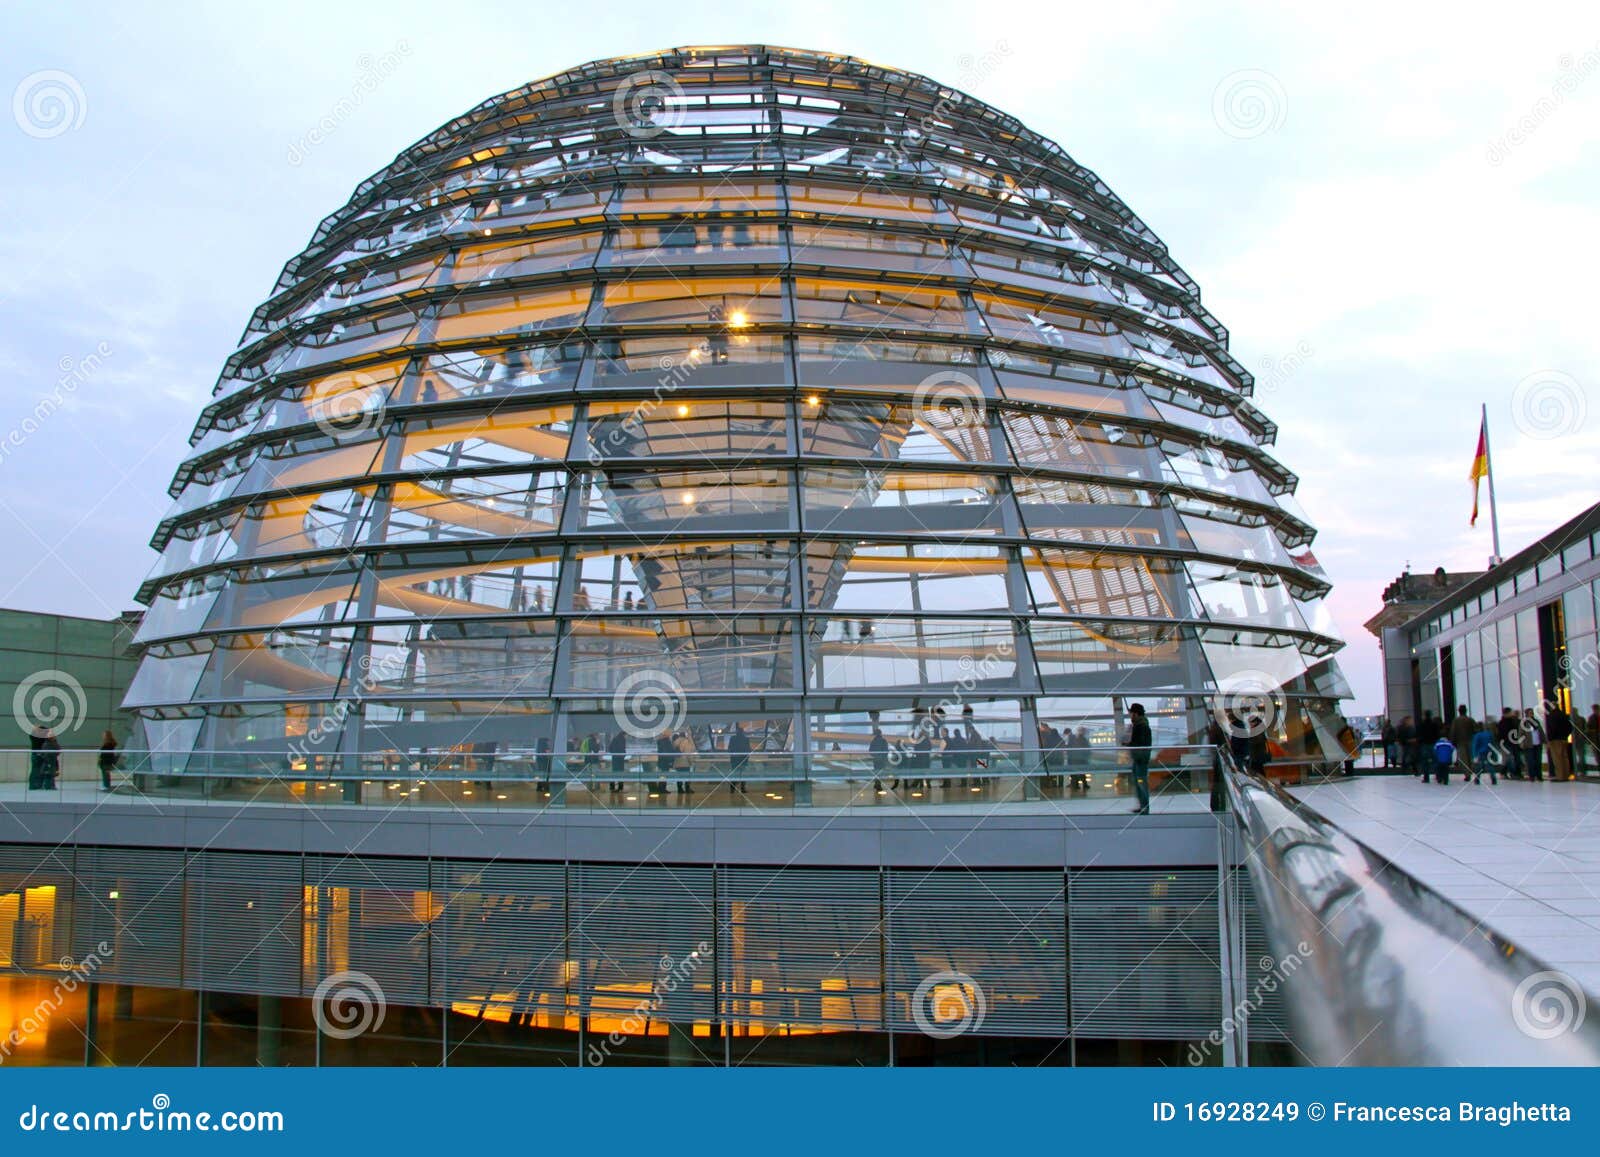 reichstag dome, berlin